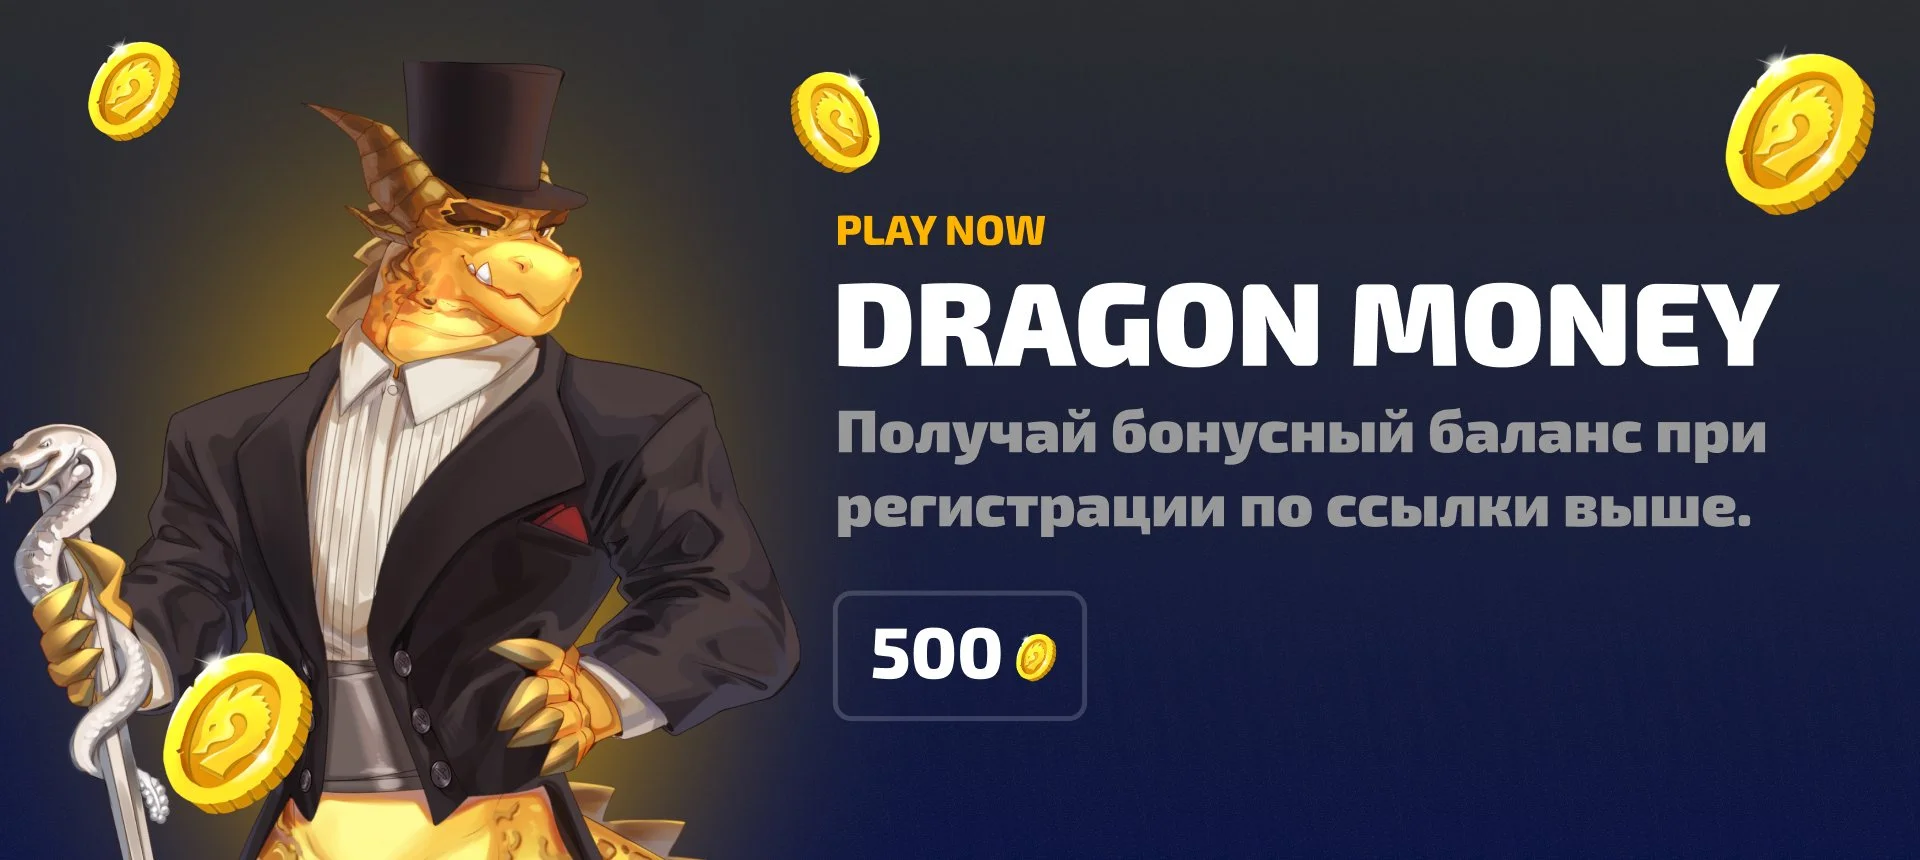 Dragon Money Casino – сайт онлайн